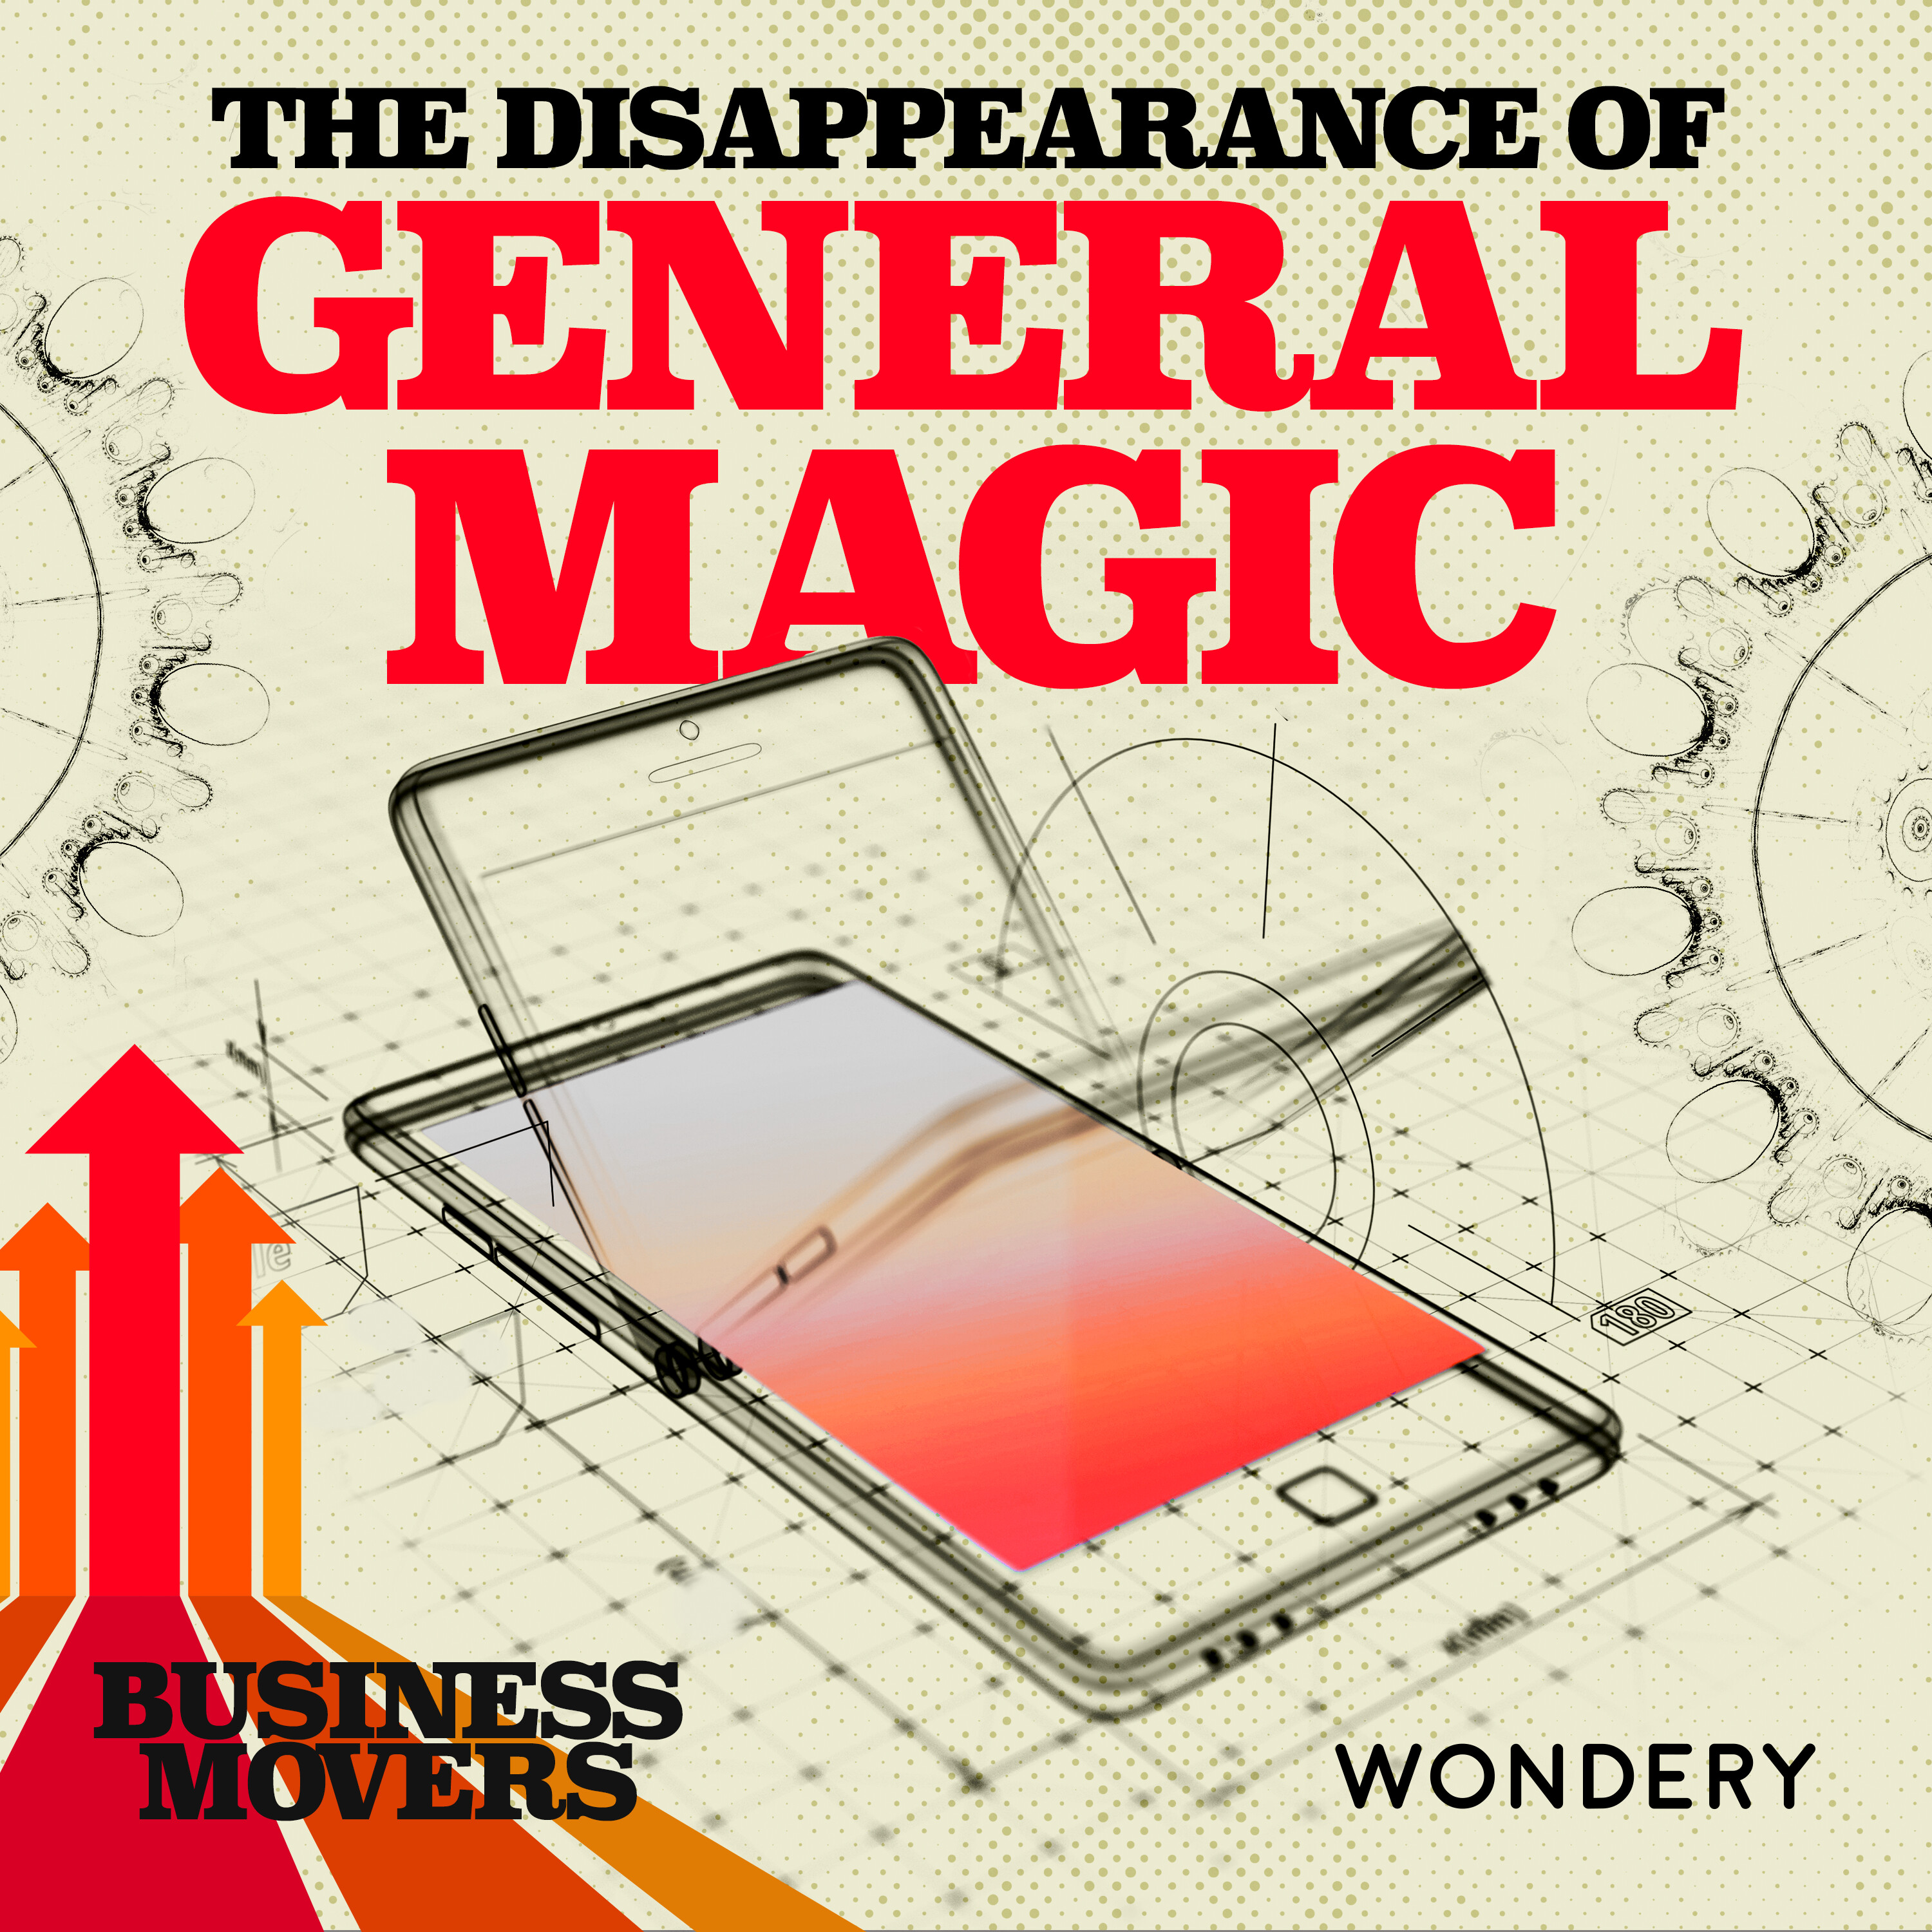 The Disappearance of General Magic | Filmmaker Sarah Kerruish on her documentary ‘General Magic' | 5